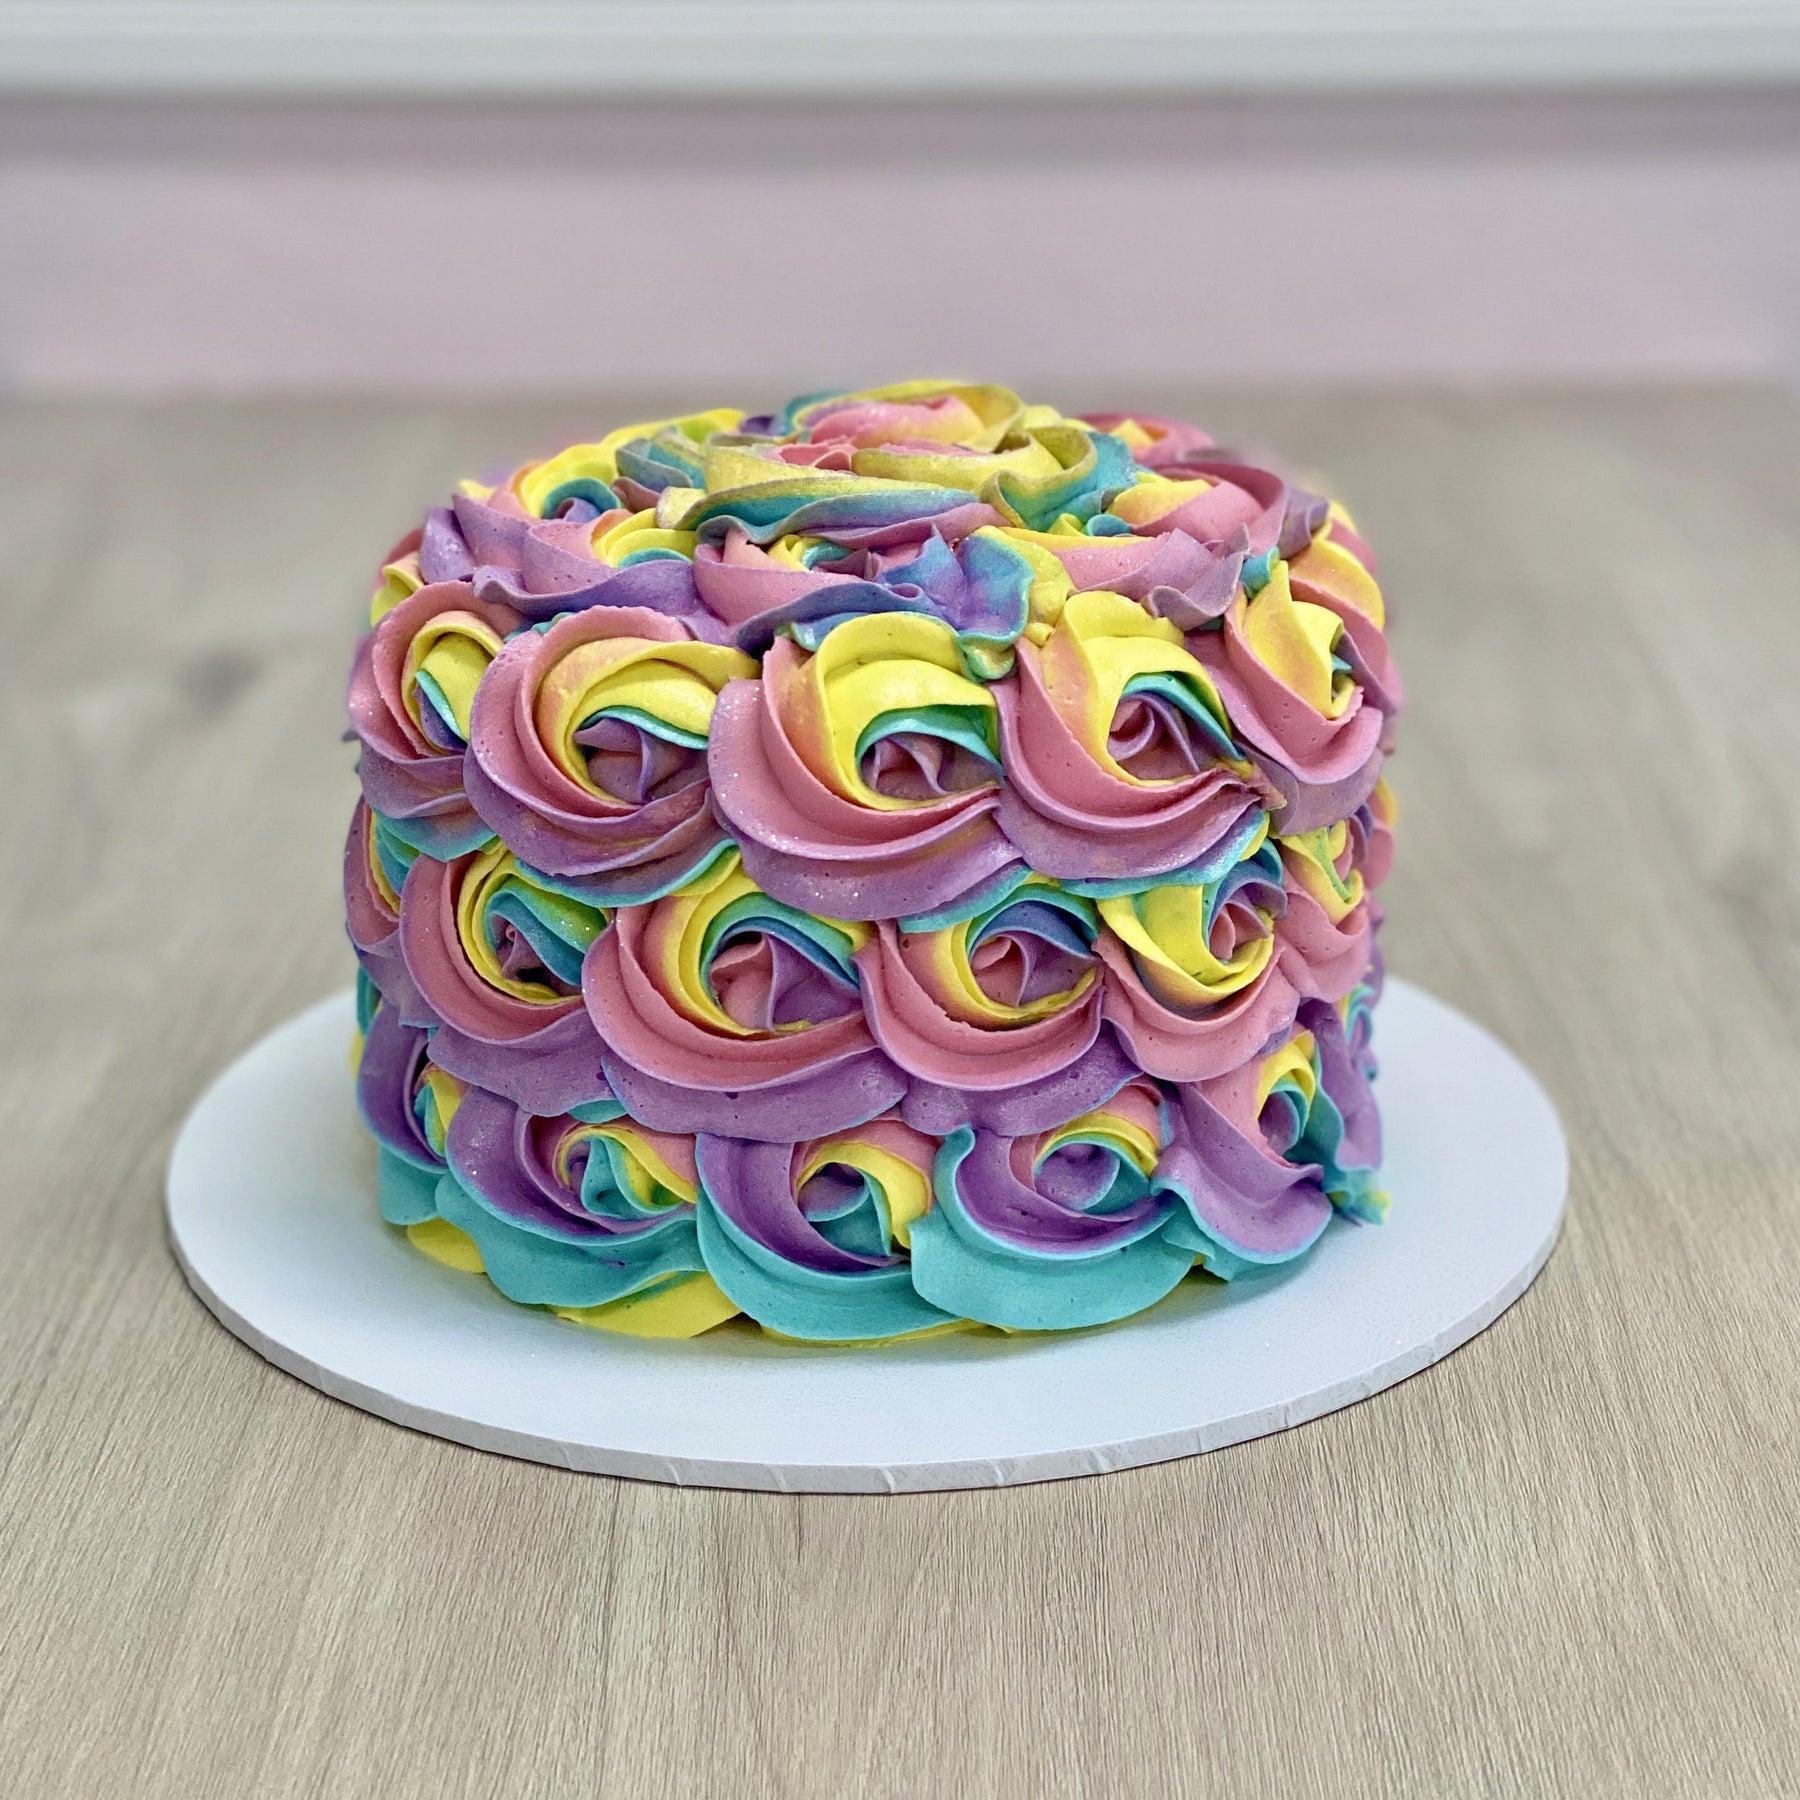 Tiffycakes Custom Cakes and Catering - 1800 drip cake! | Facebook